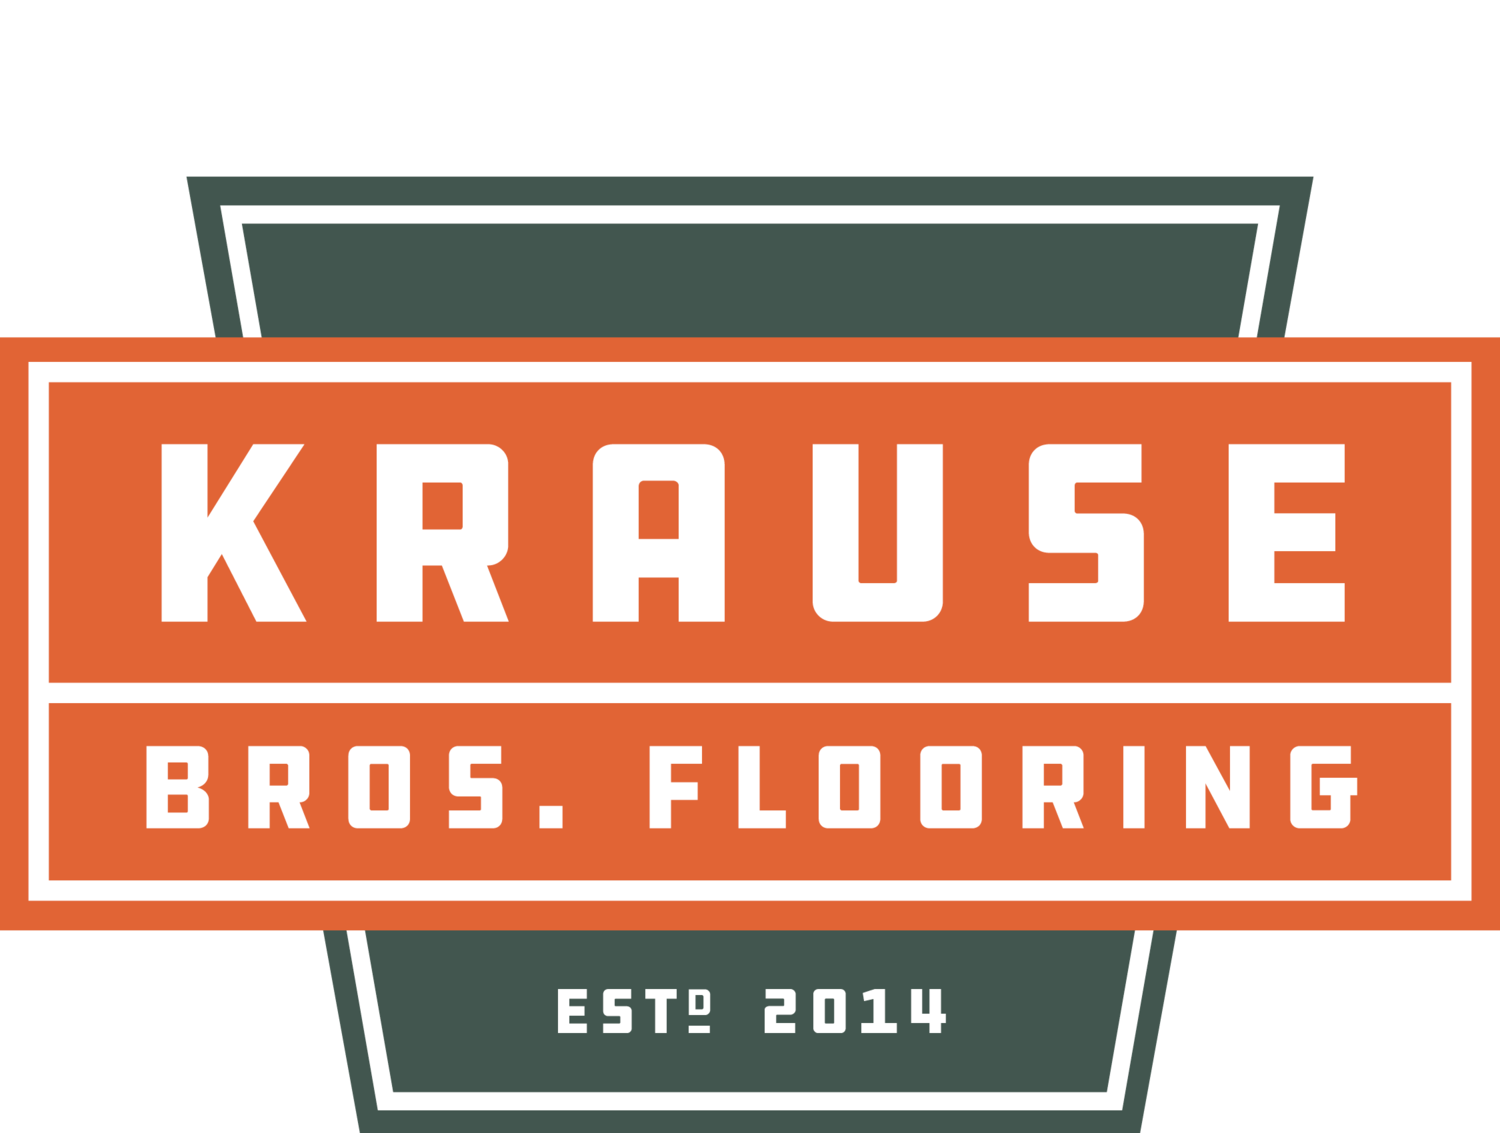 Krause Brothers Flooring